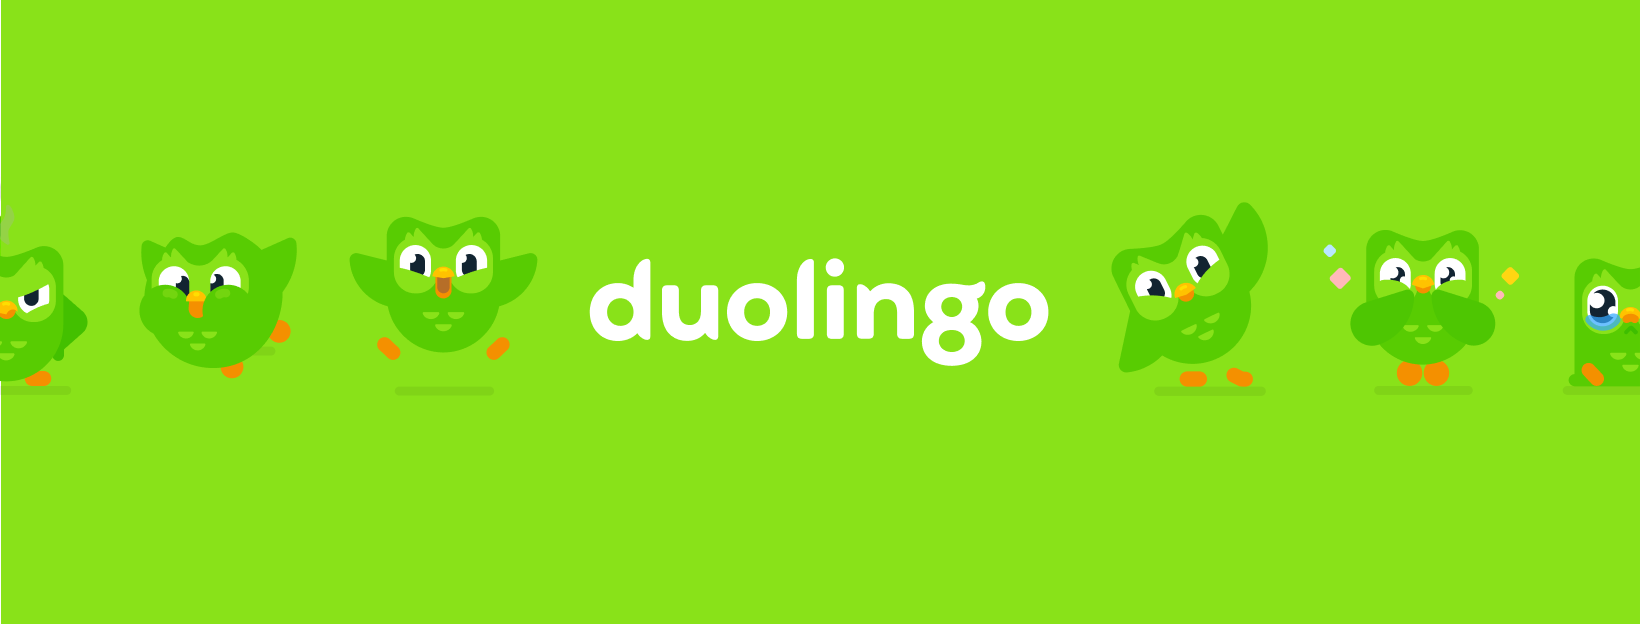 Hình Duolingo 4K chất lượng cao